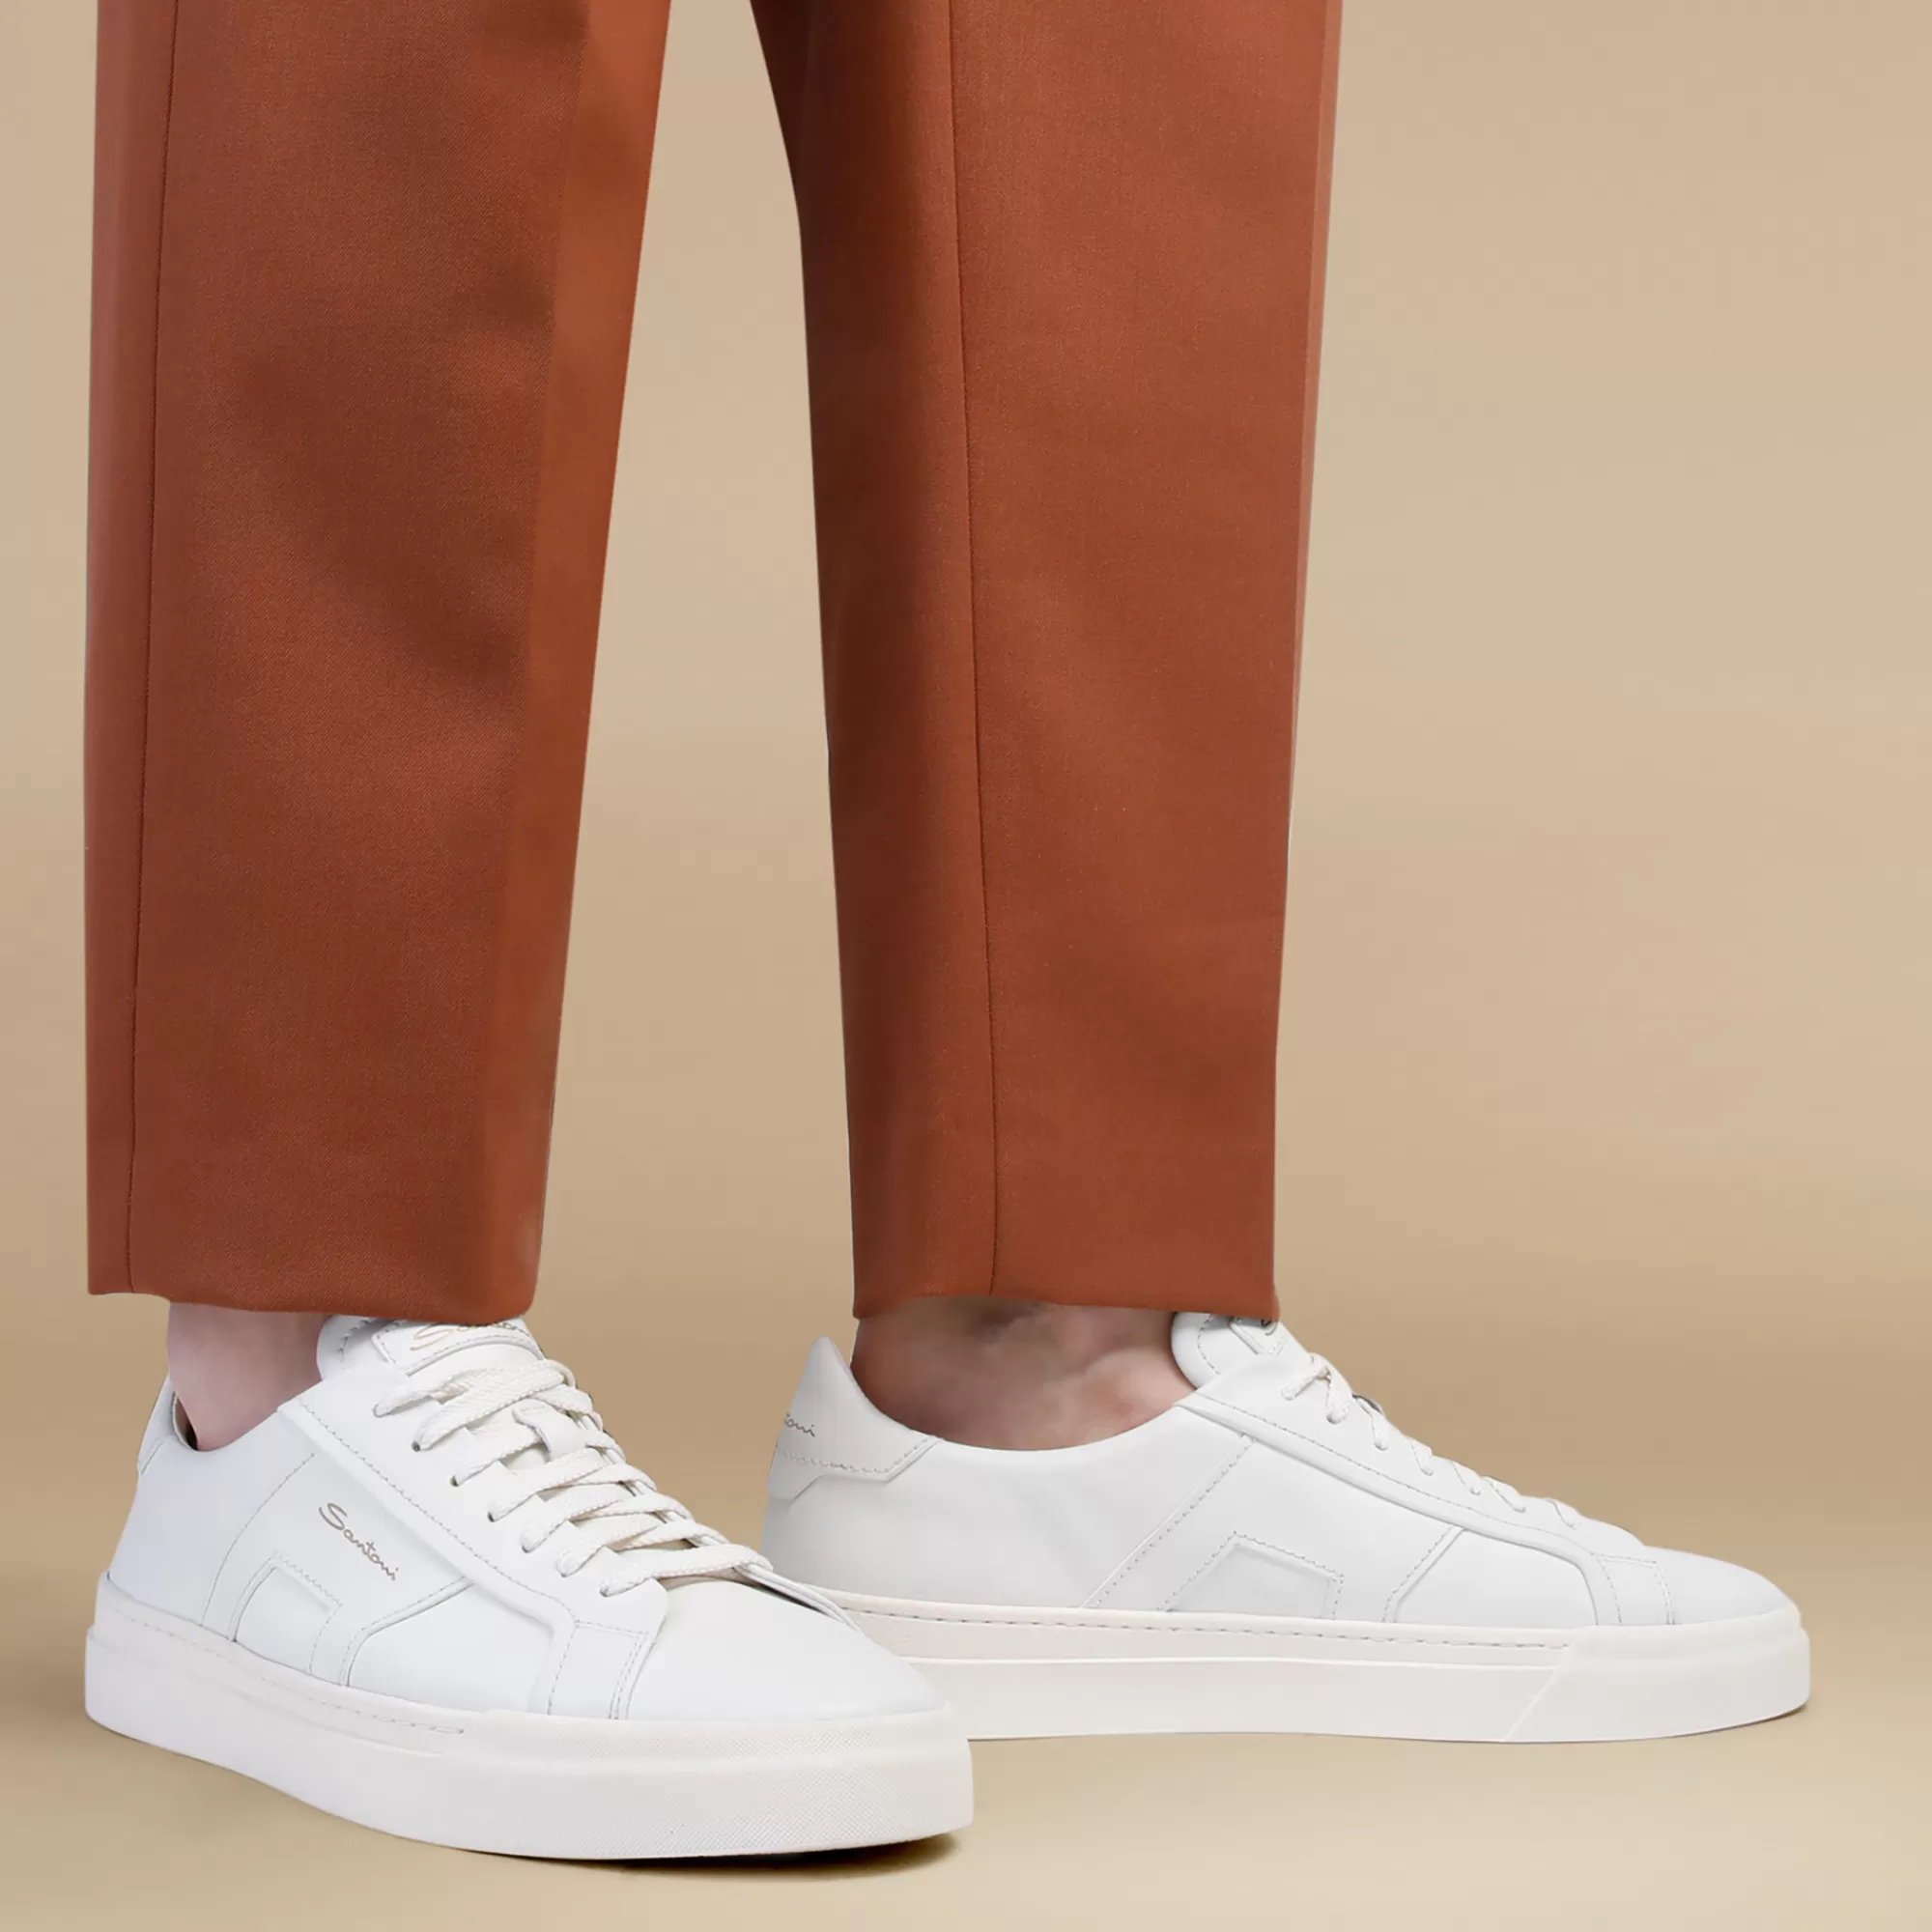 Store Double buckle sneaker da uomo in pelle bianca Vedi tutte le calzature | Sneakers